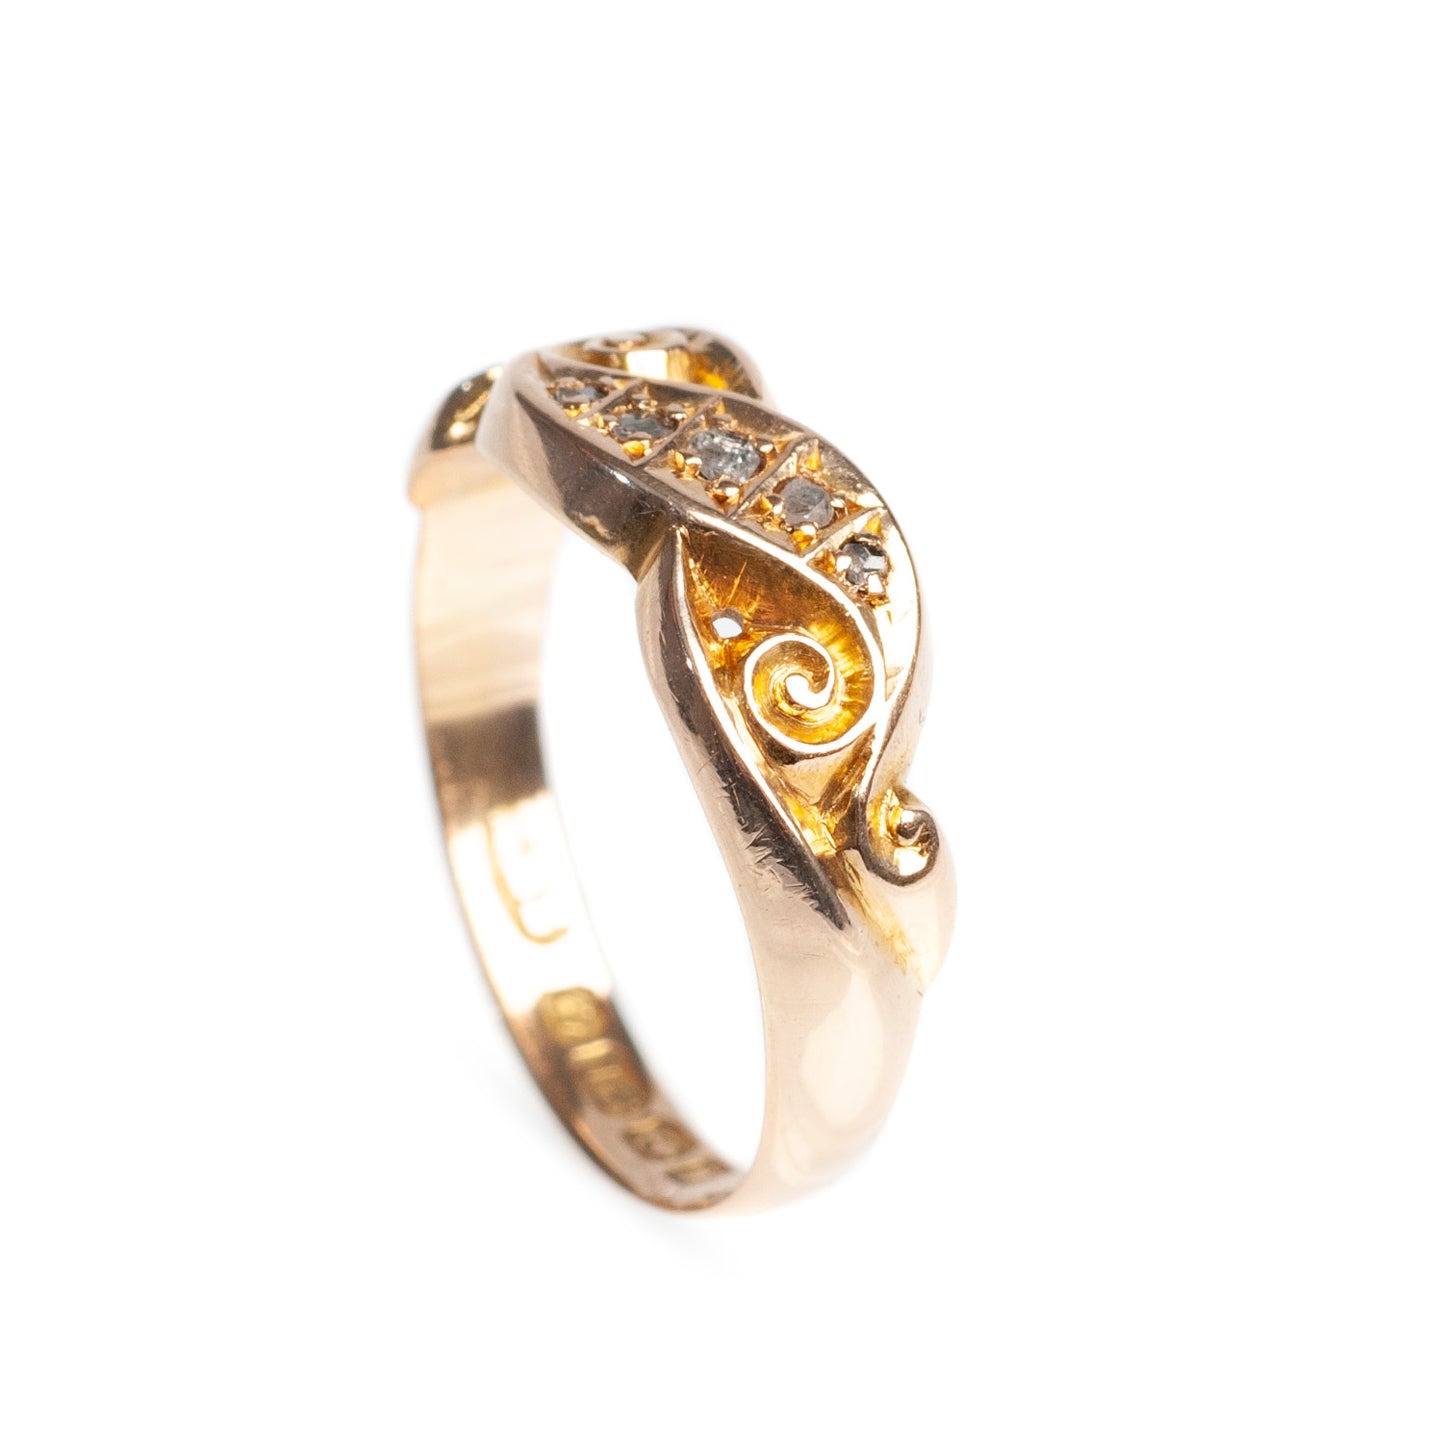 Antique 18ct Gold & Diamond Victorian Ring Hallmarked 1883 Size K  (Code A452)